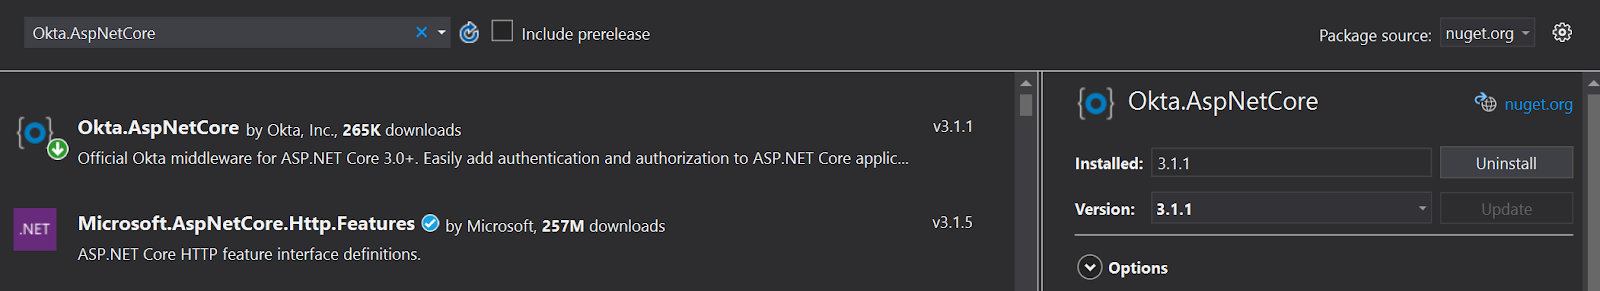 Install Okta .NET Core version 3.1.1.